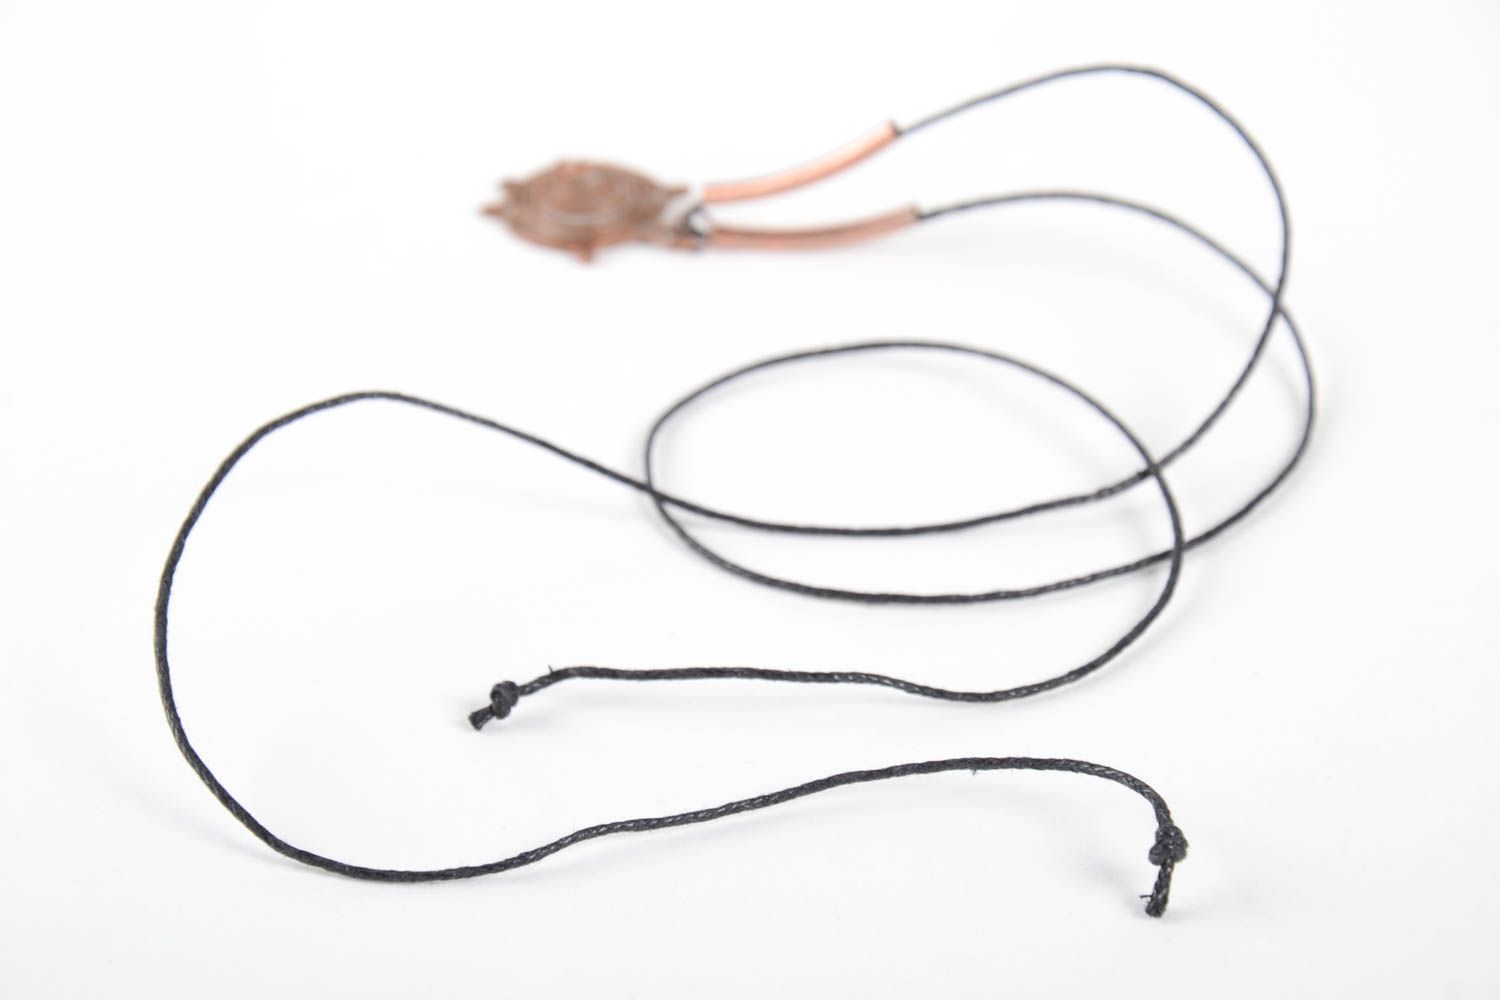 Stylish jewelry handmade copper pendant wire wrap pendant elegant jewelry photo 5